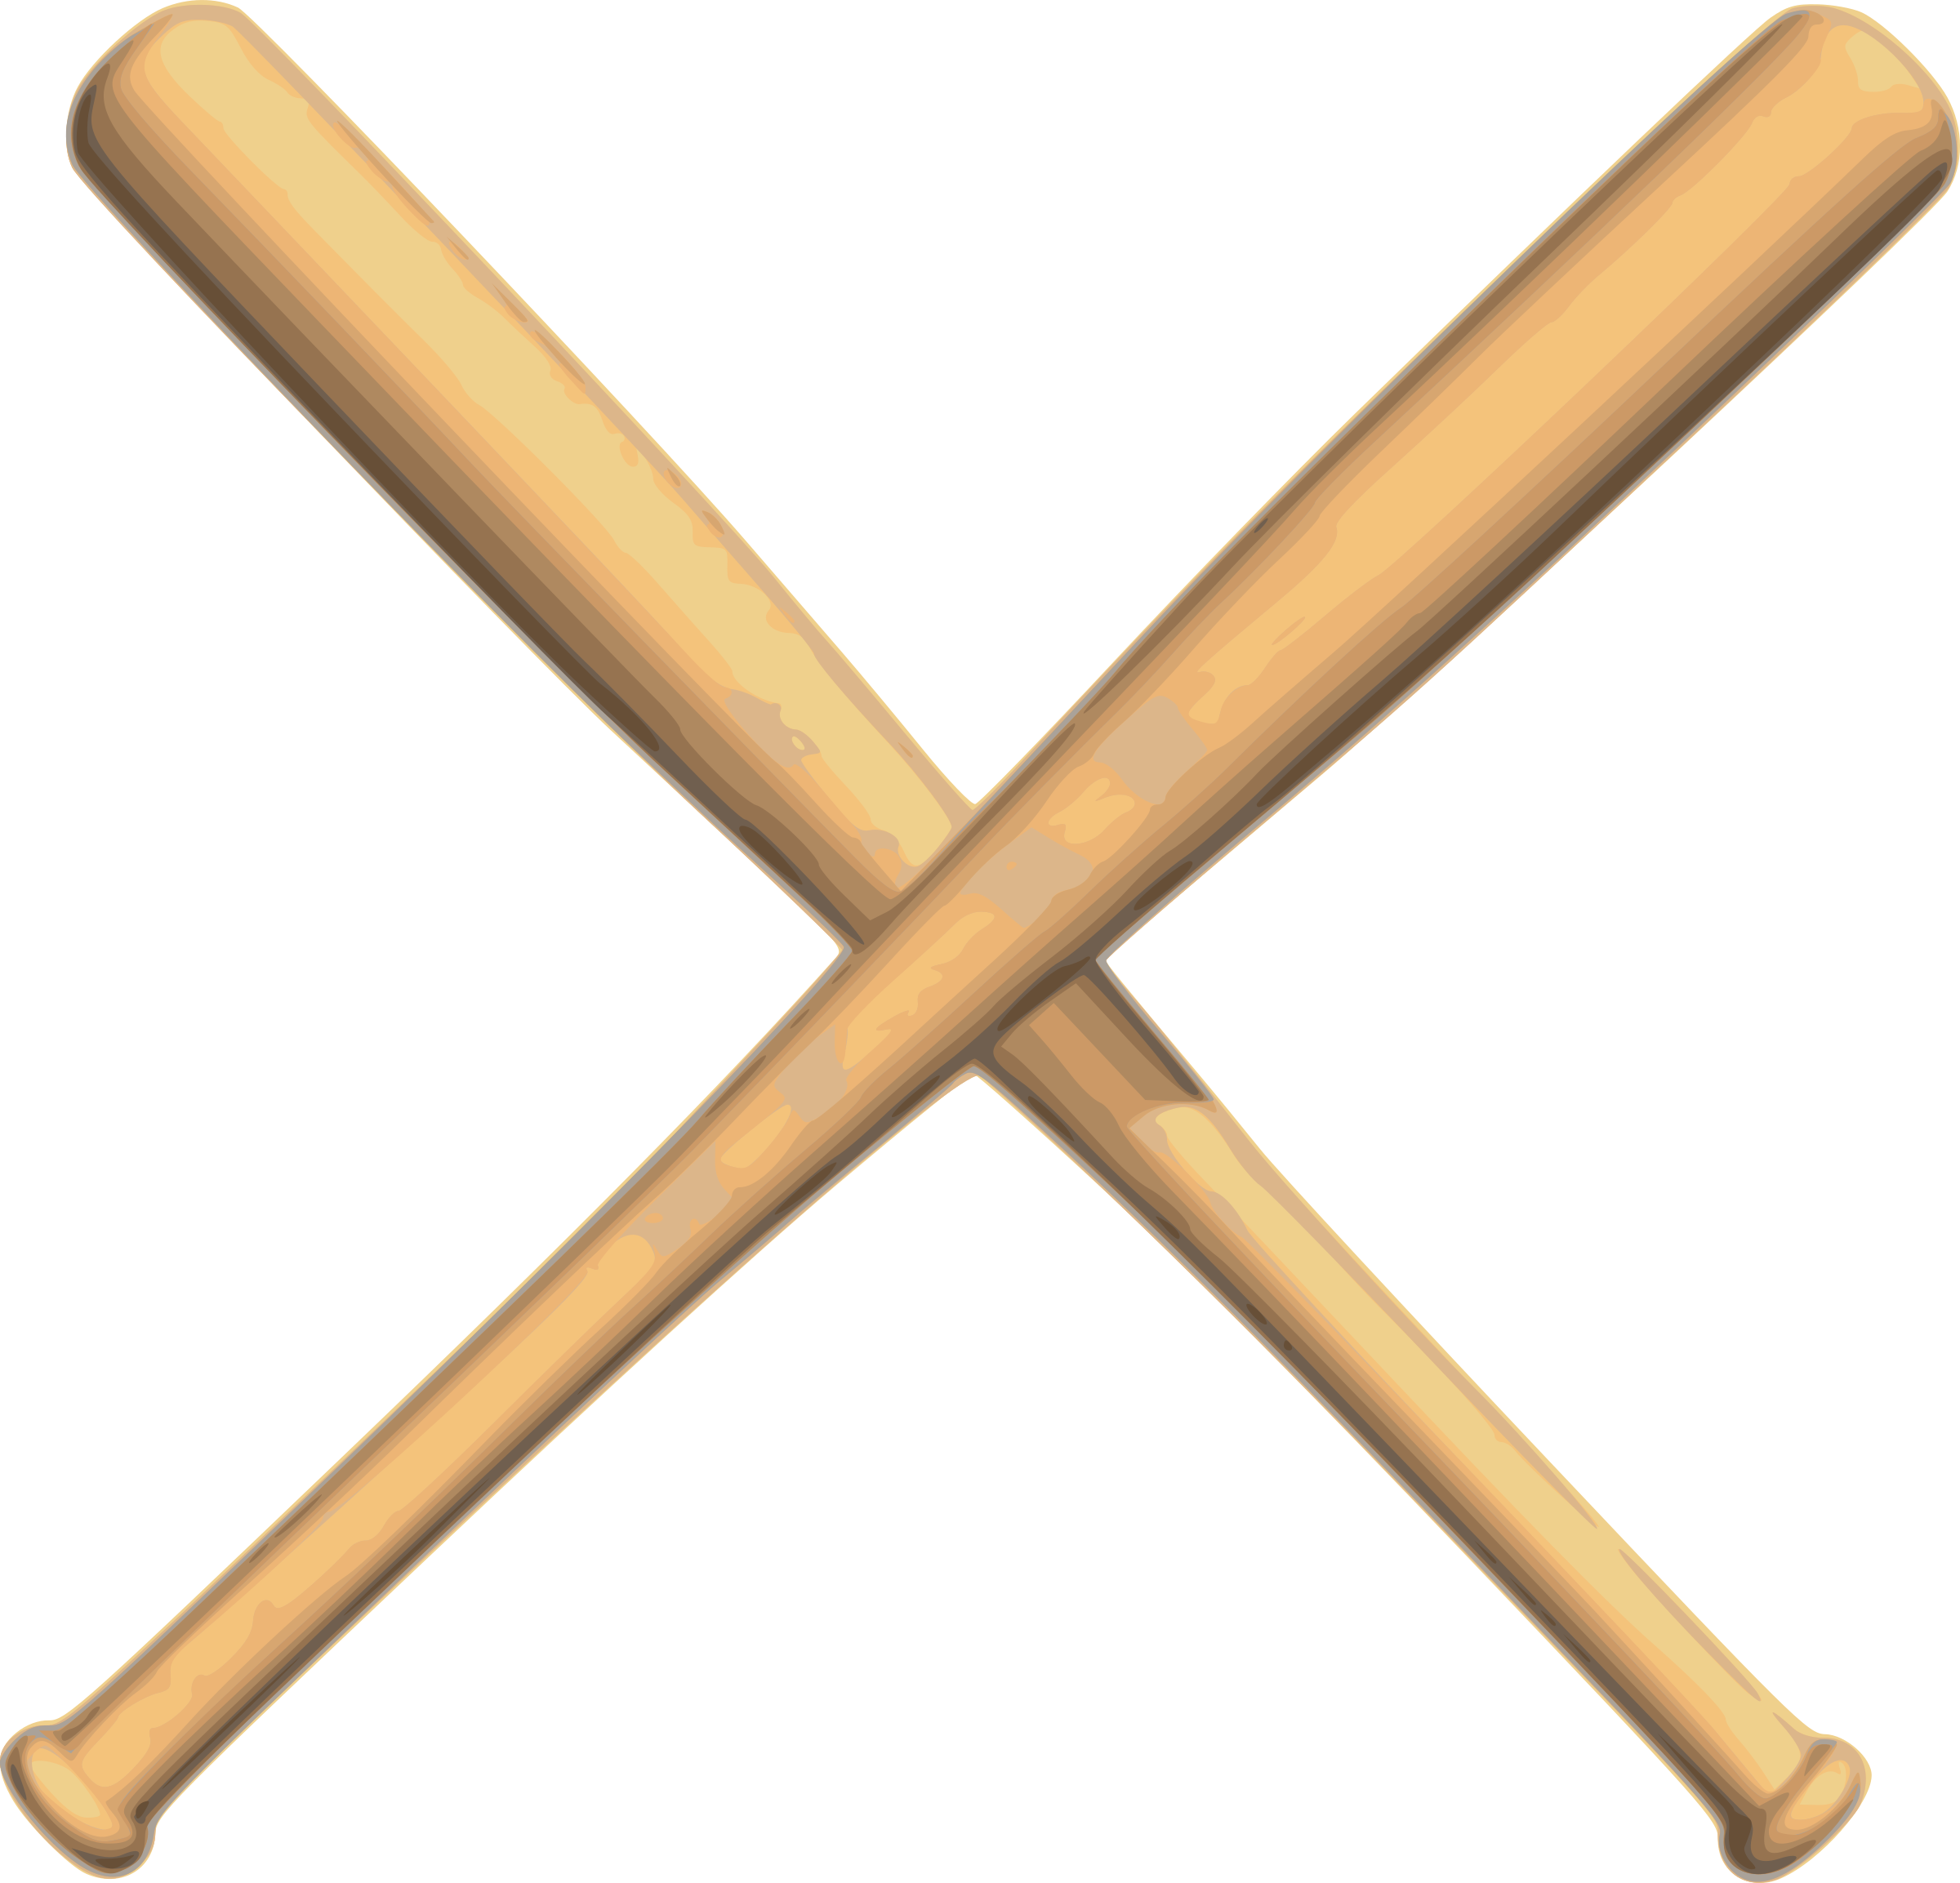 Baseball bat baseball crossed bats clipart